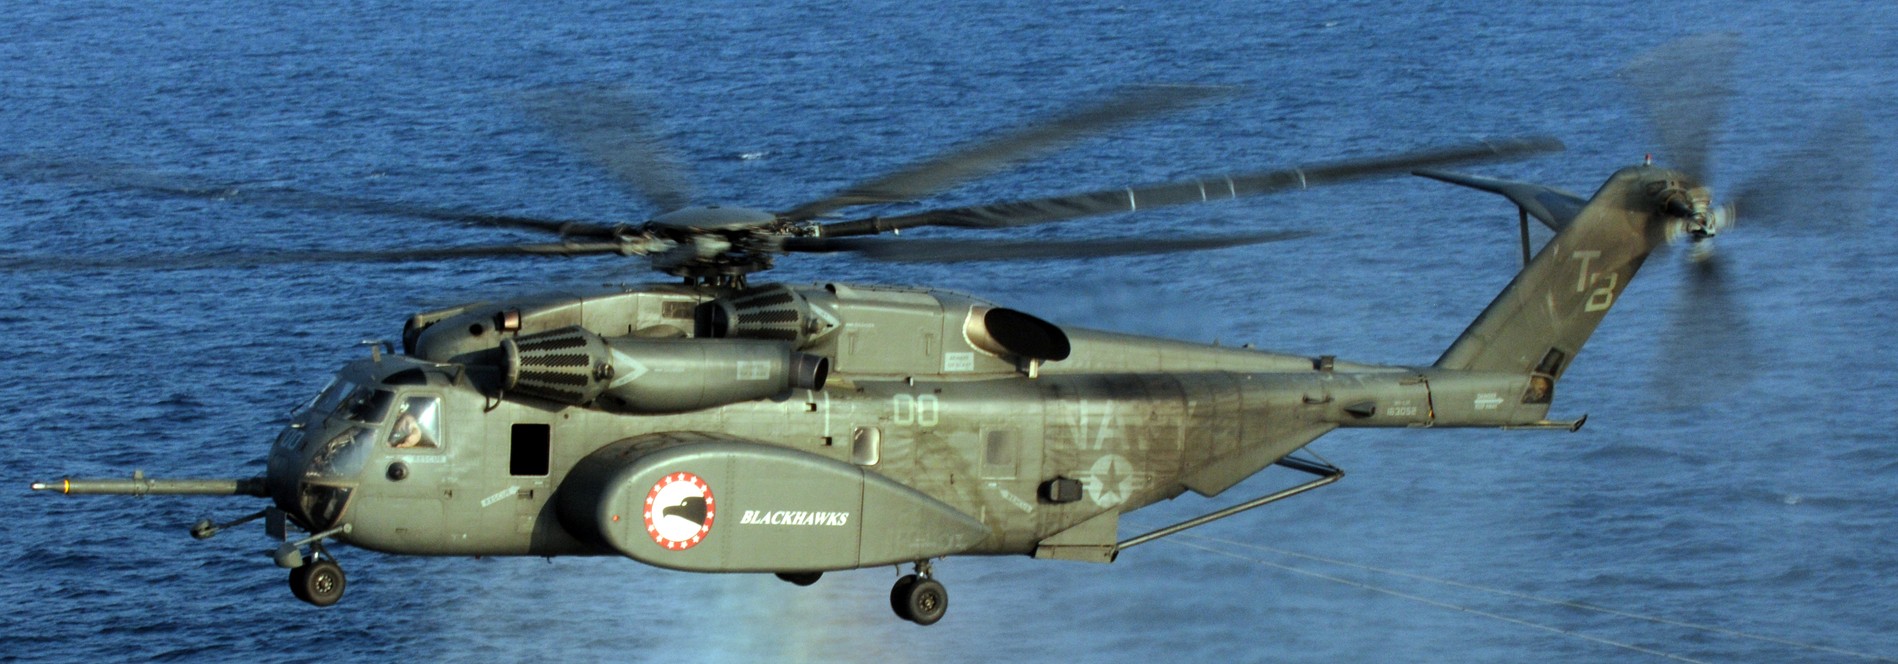 hm-15 blackhawks helicopter mine countermeasures squadron navy mh-53e sea dragon 64 persian gulf